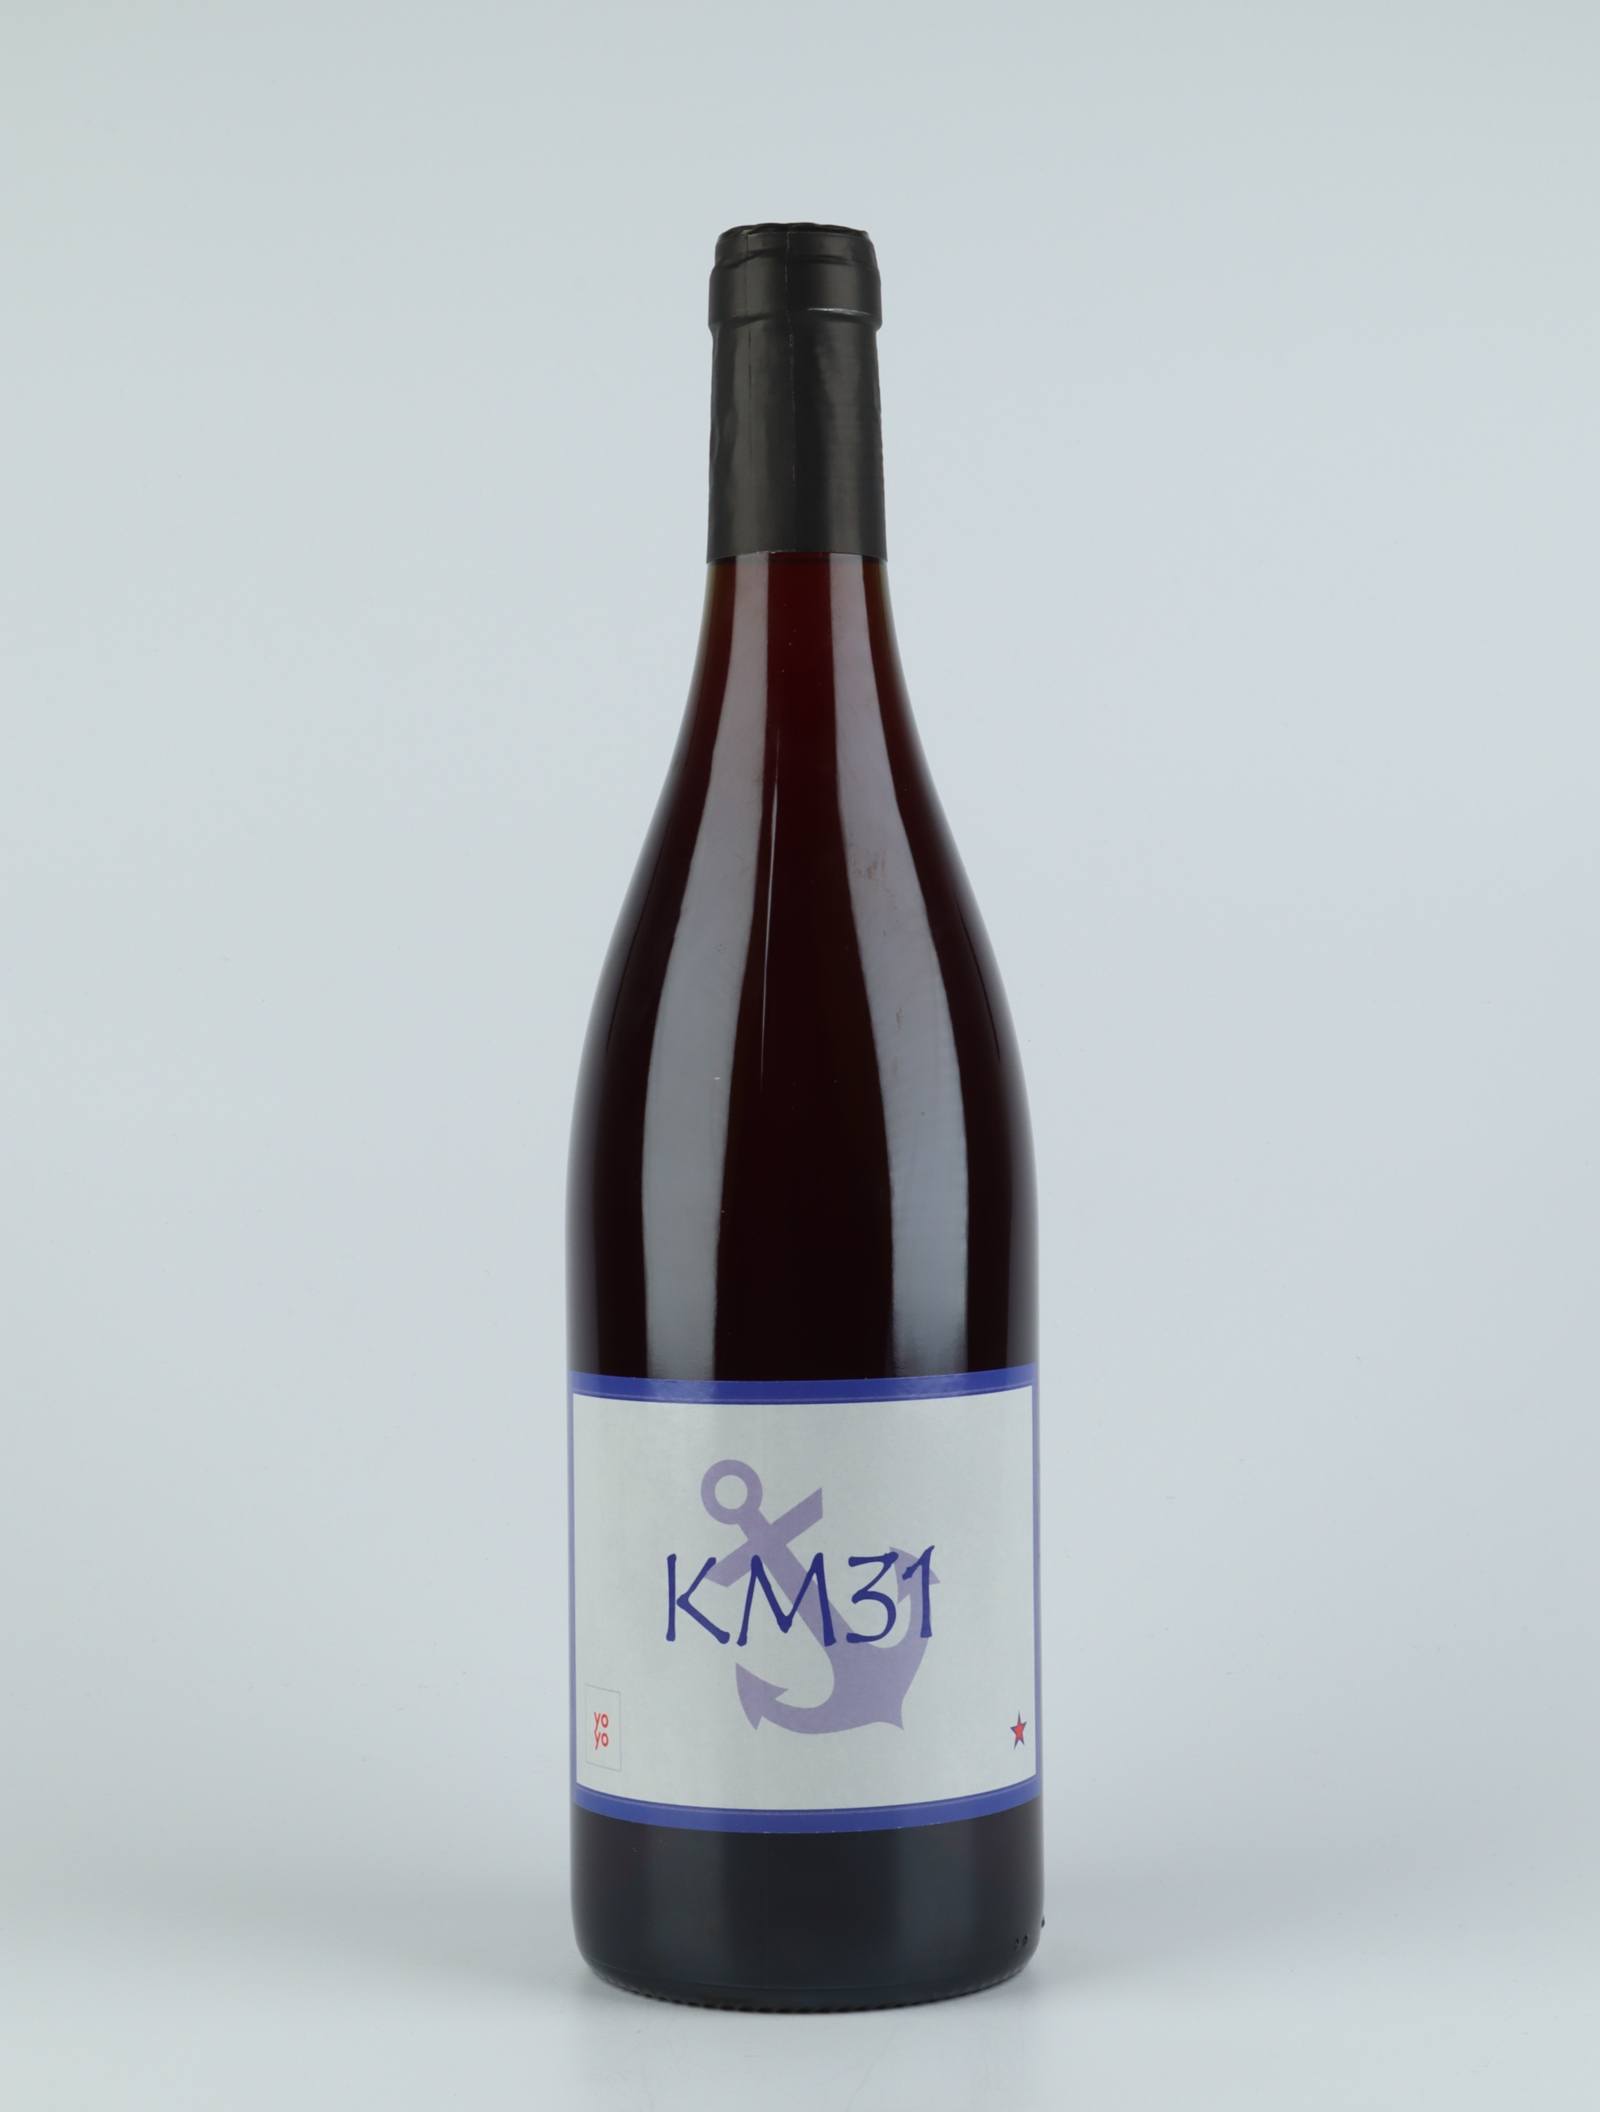 En flaske 2019 KM31 Rødvin fra Domaine Yoyo, Rousillon i Frankrig